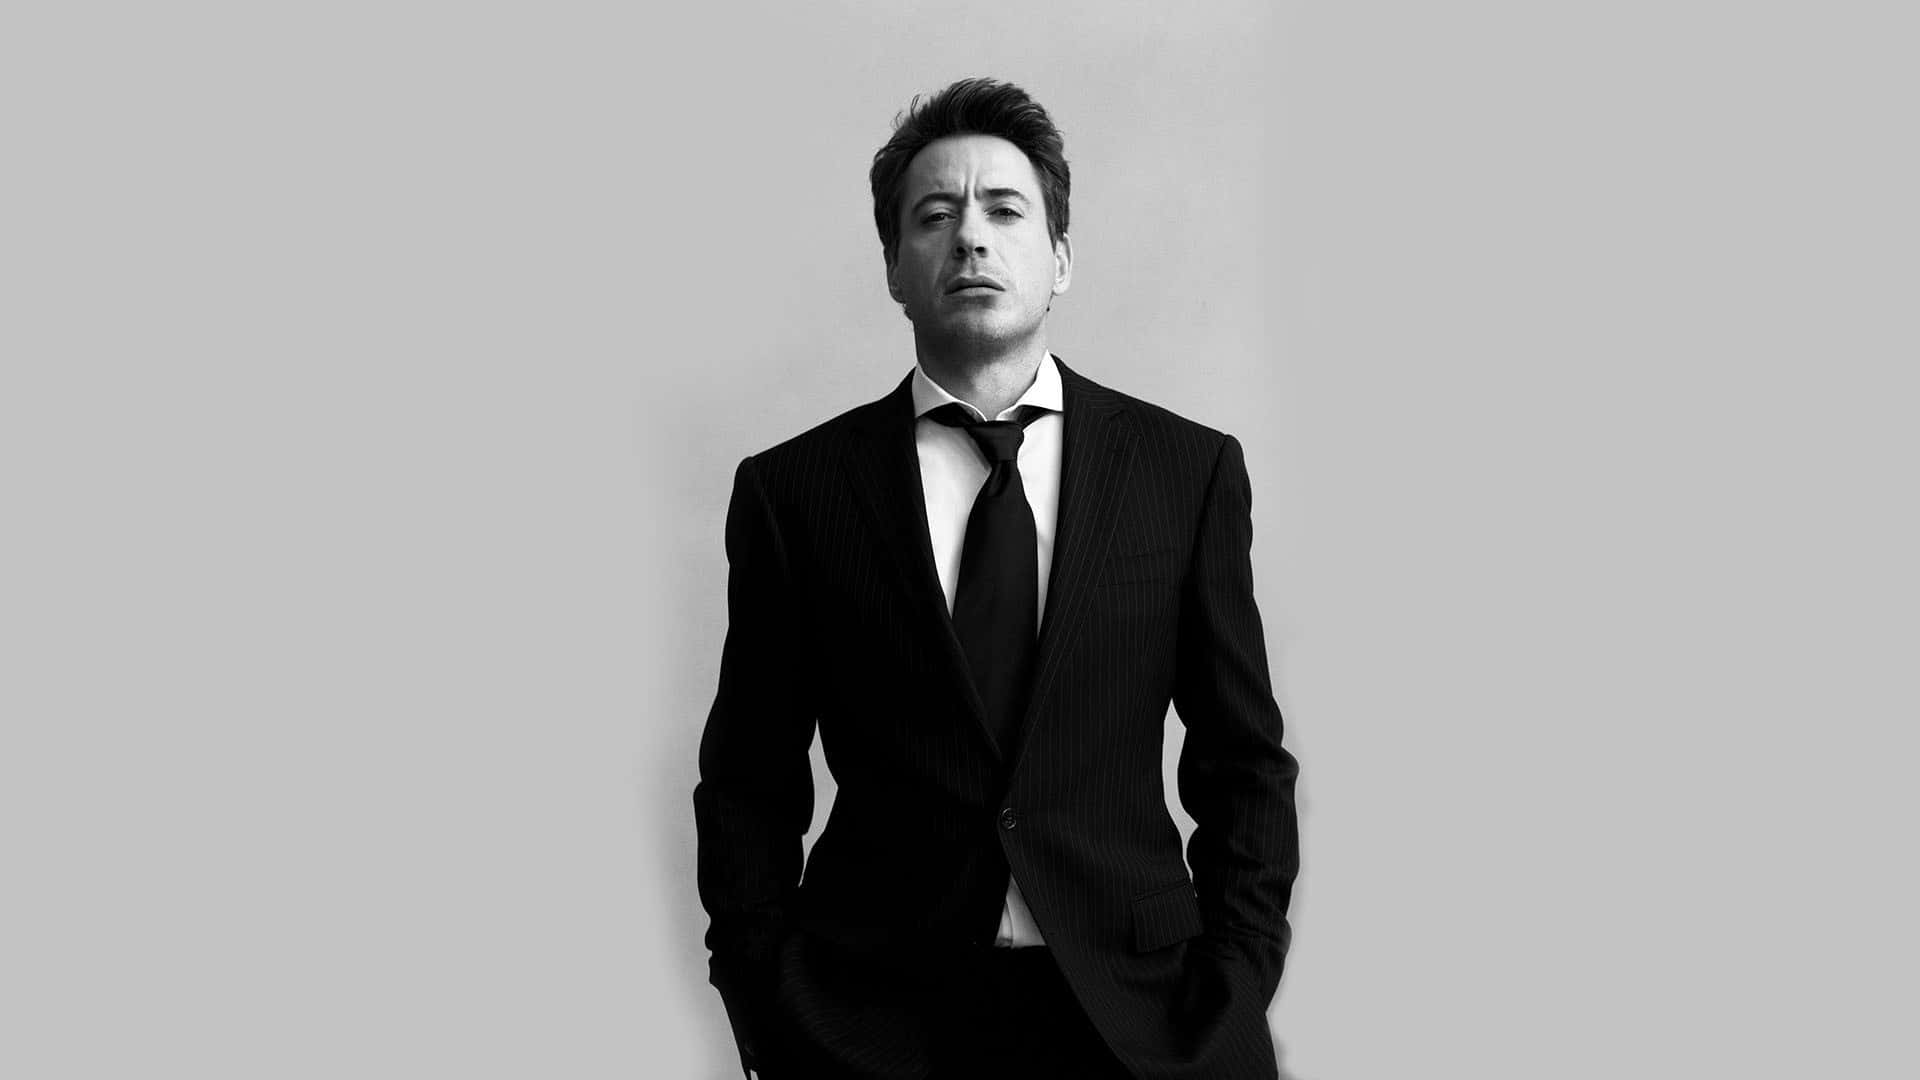 Man In Suit Robert Downey Jr Background